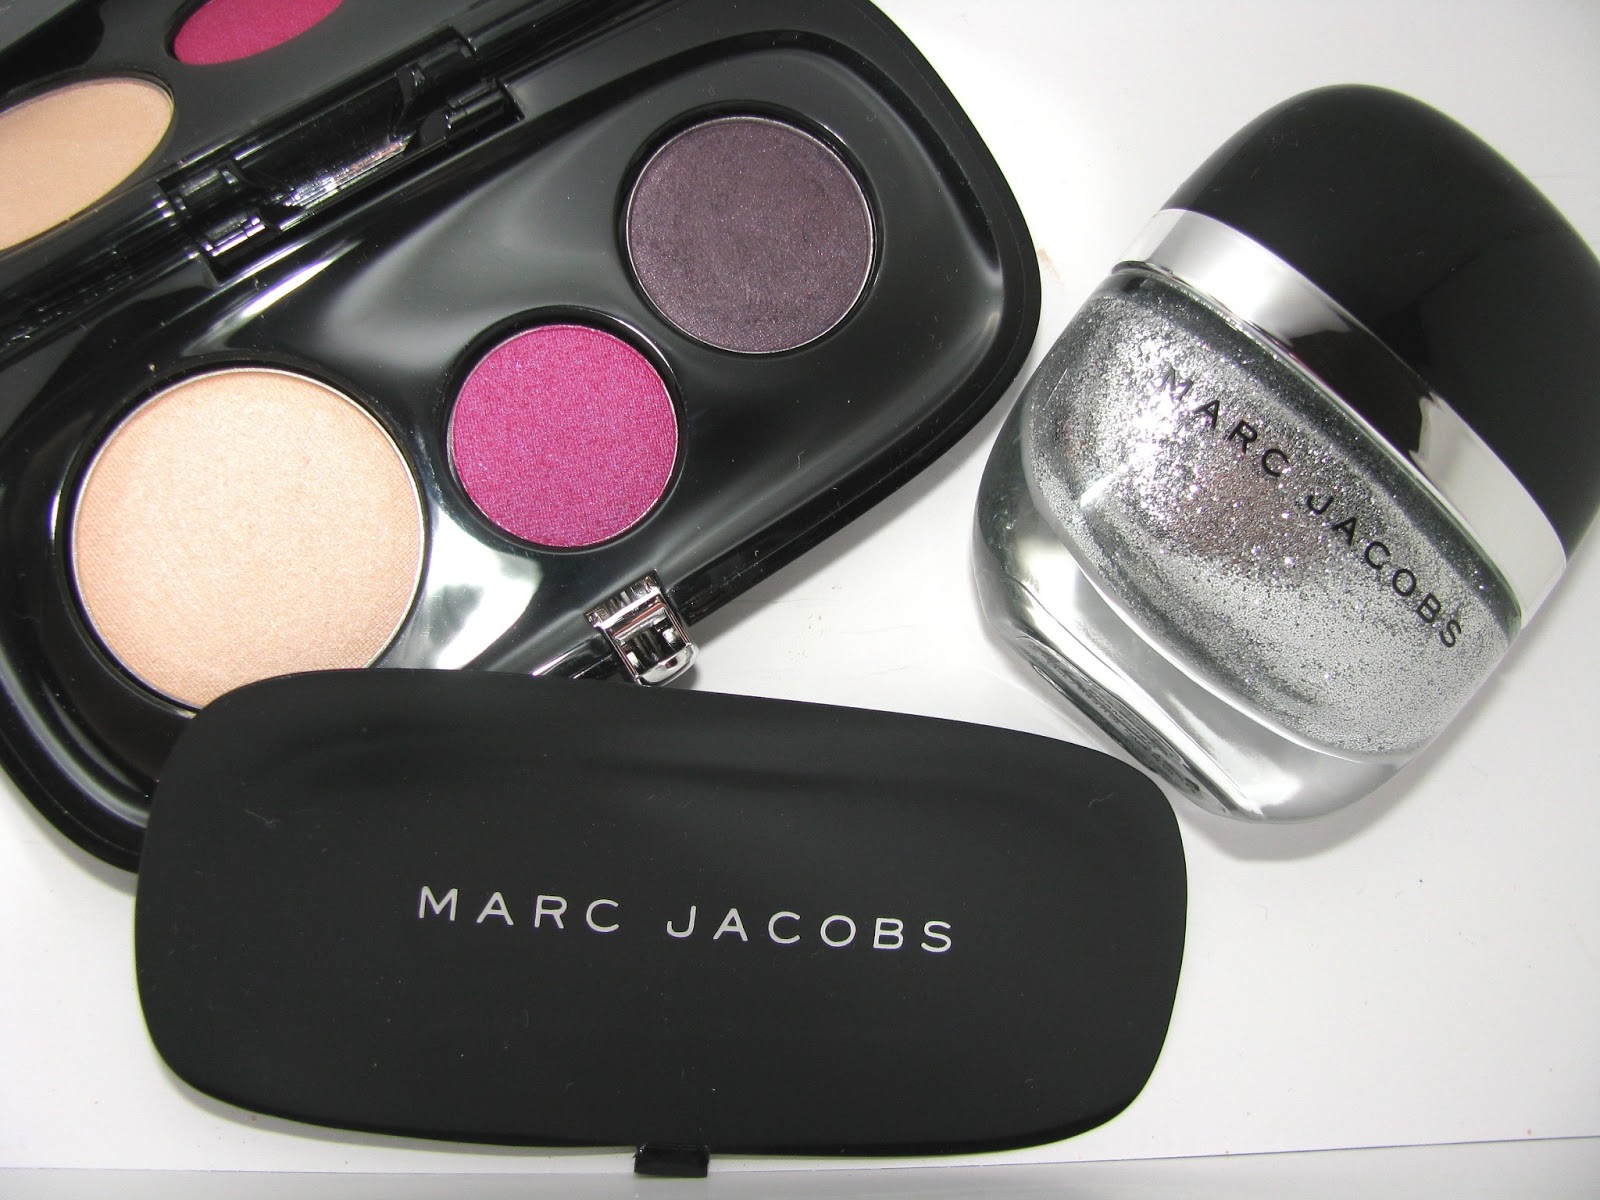 3. Marc Jacobs Beauty Enamored Hi-Shine Nail Polish in "Le Charm" - wide 5